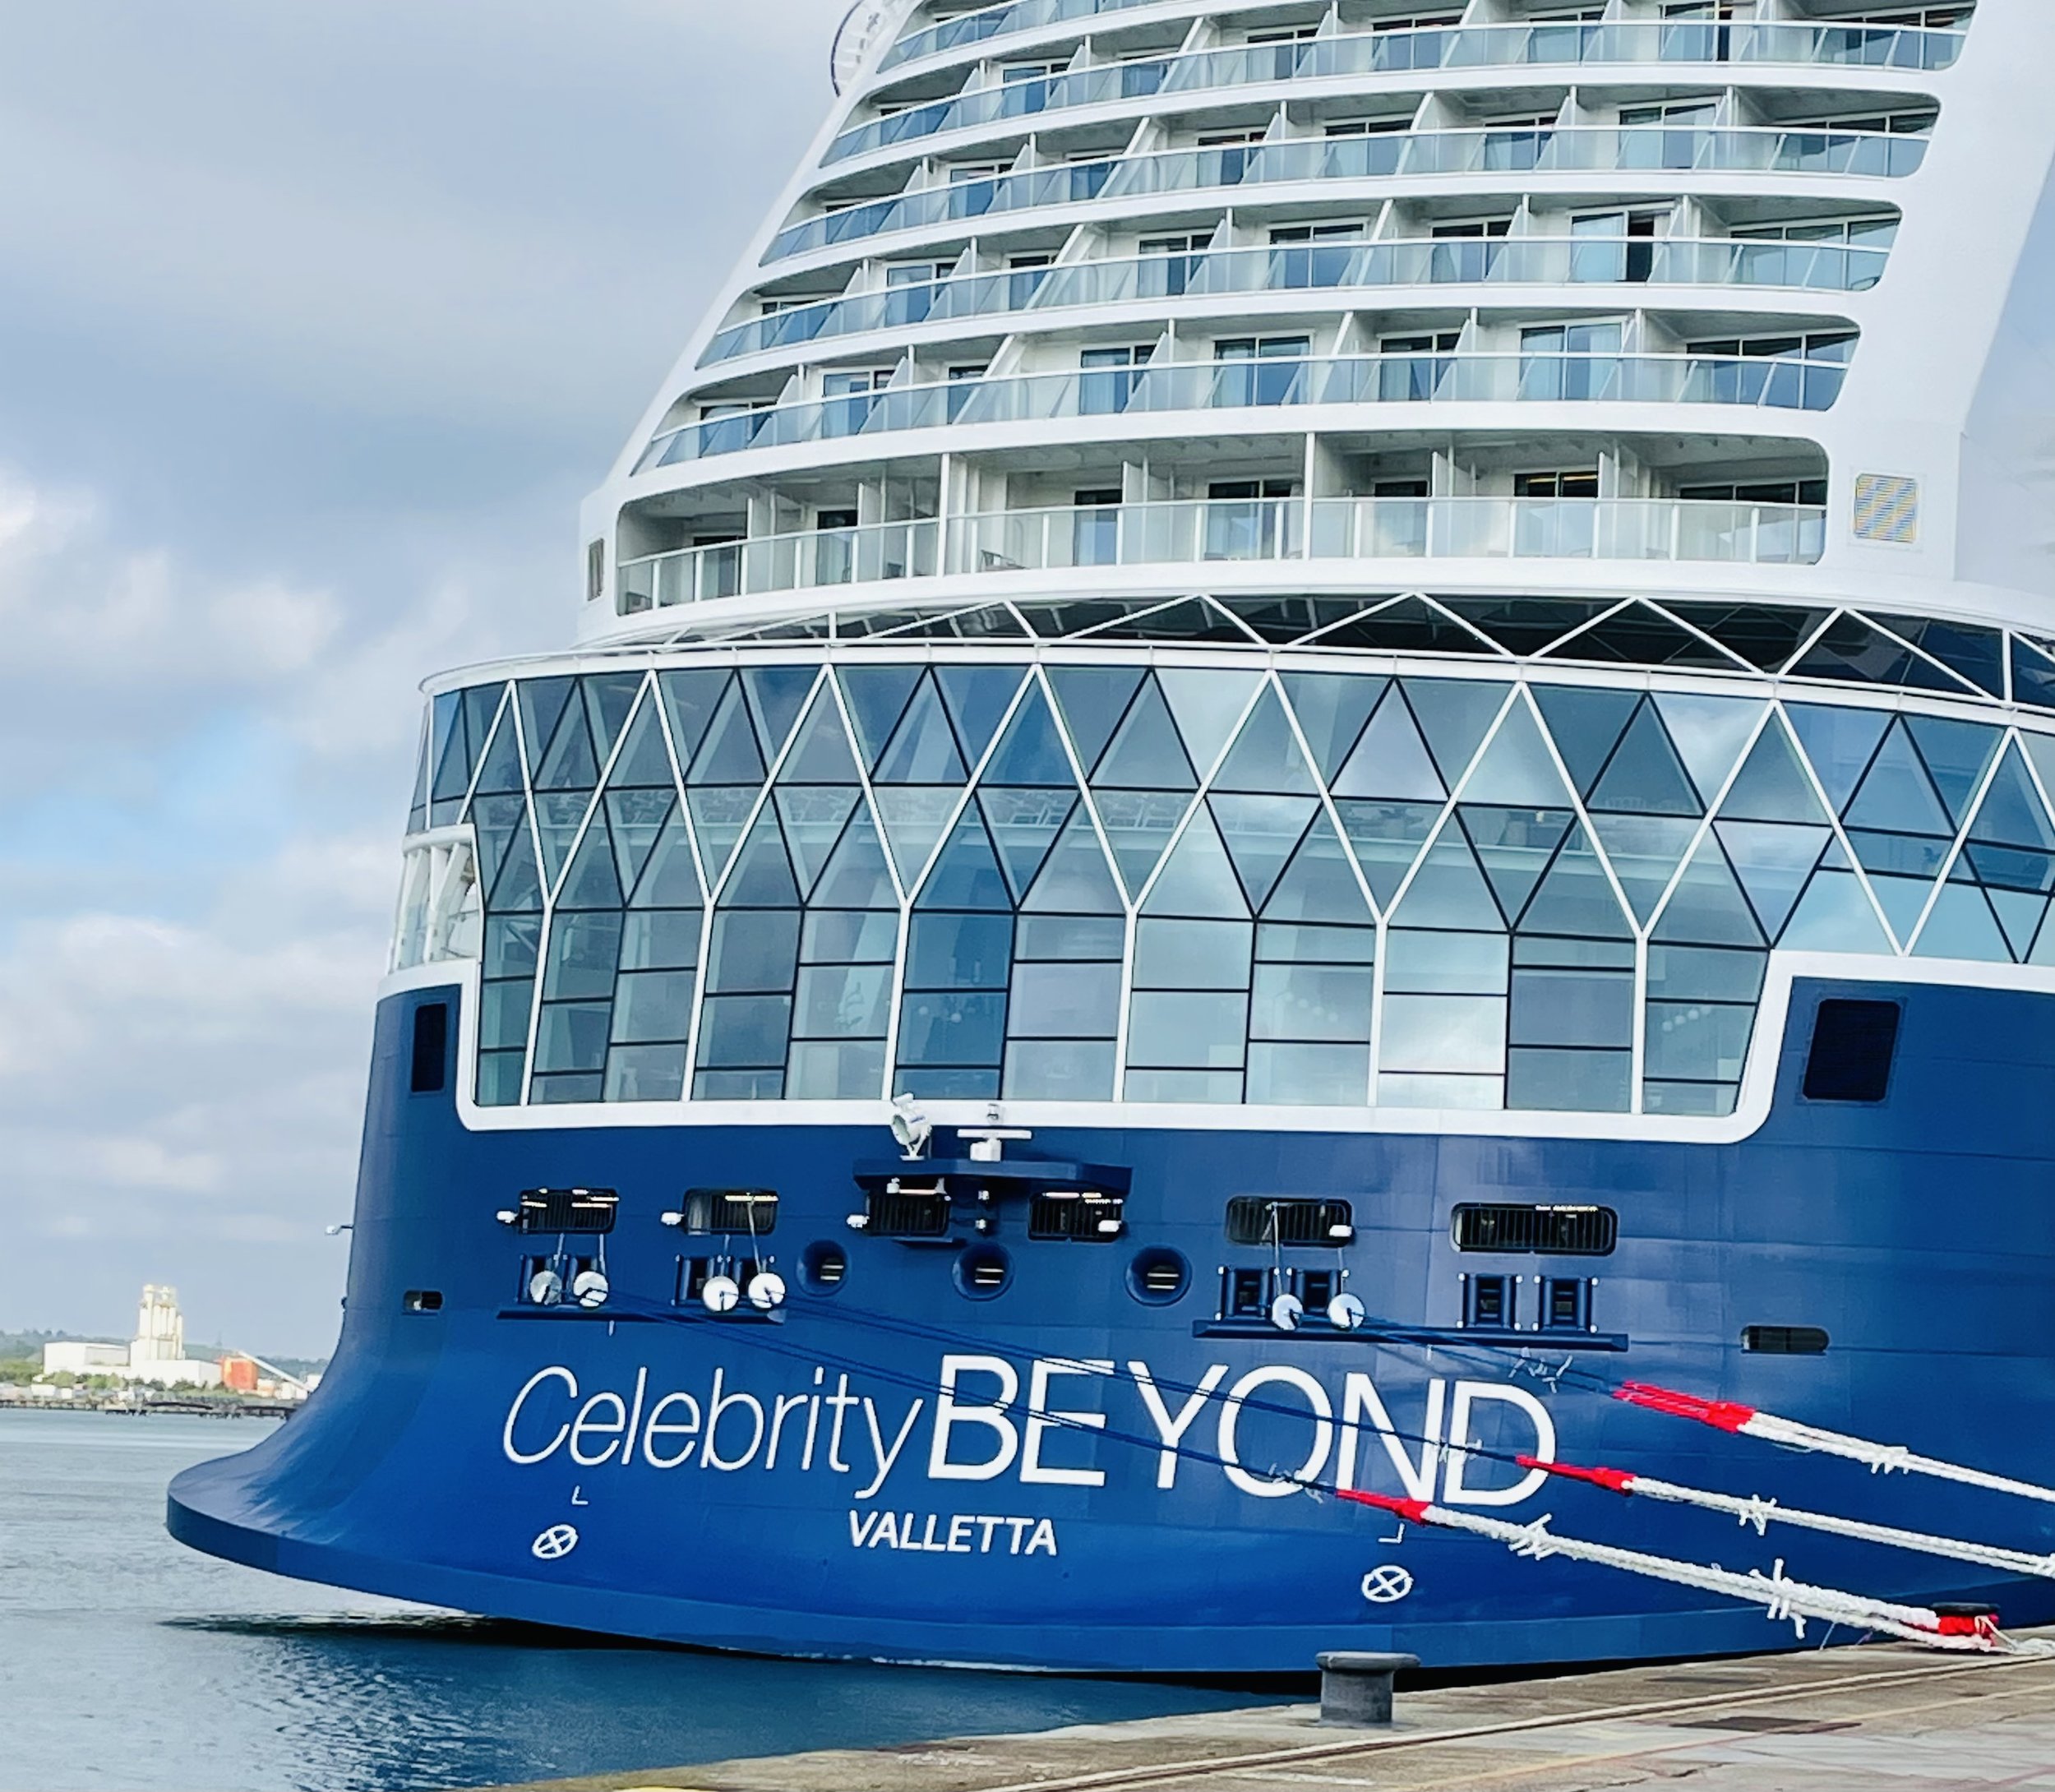 celebrity cruises beyond reviews